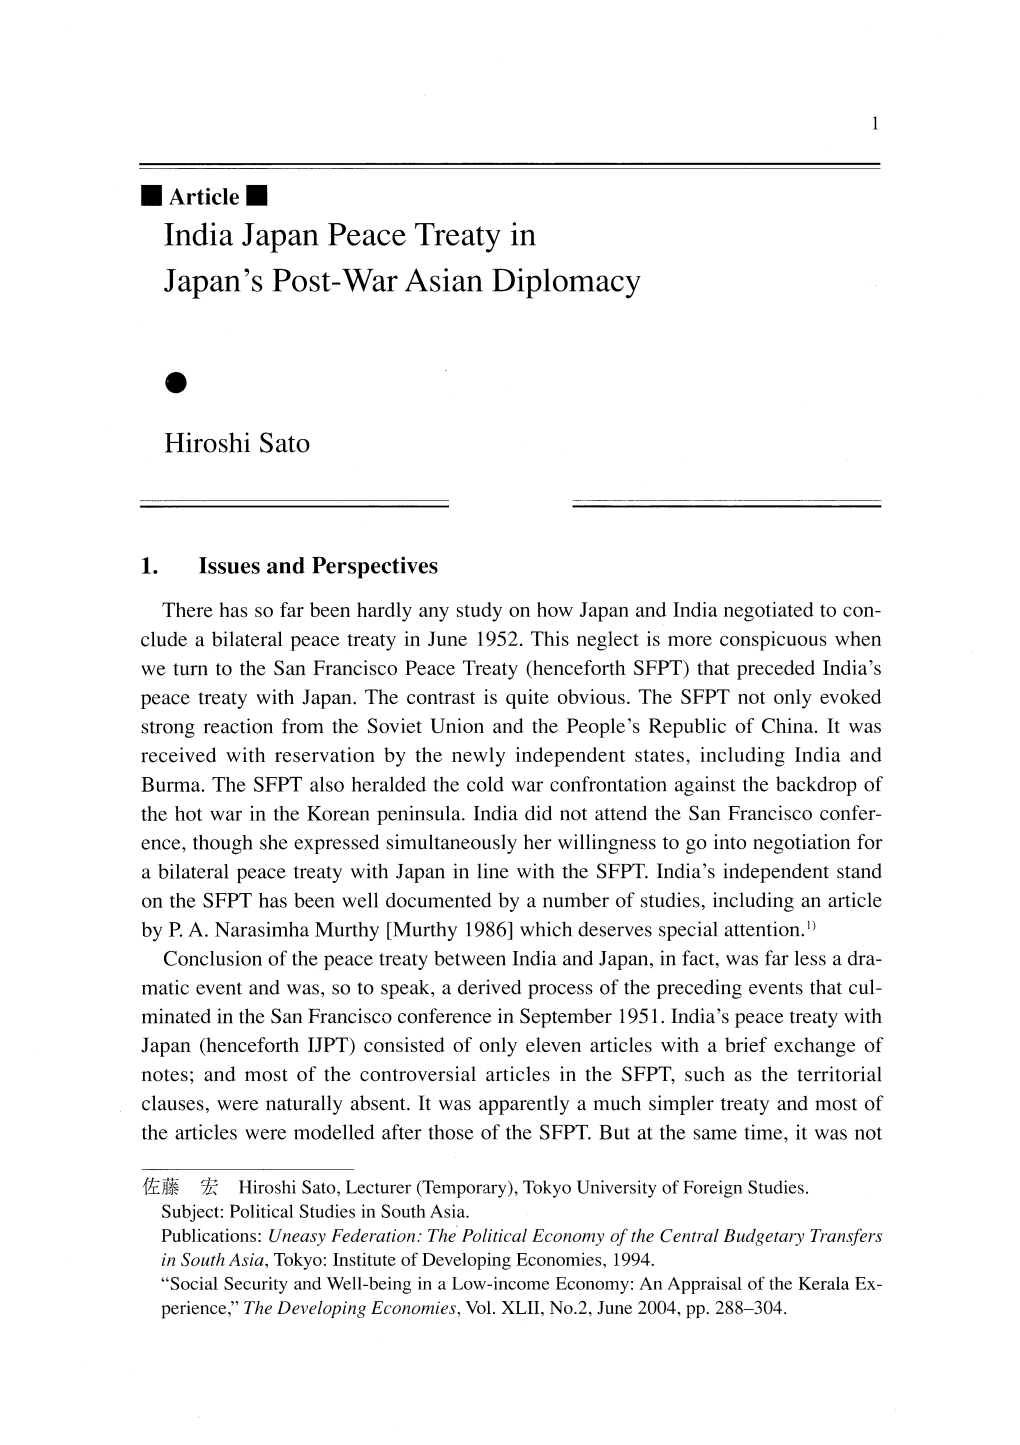 India Japan Peace Treaty in Japan's Post-War Asian Diplomacy